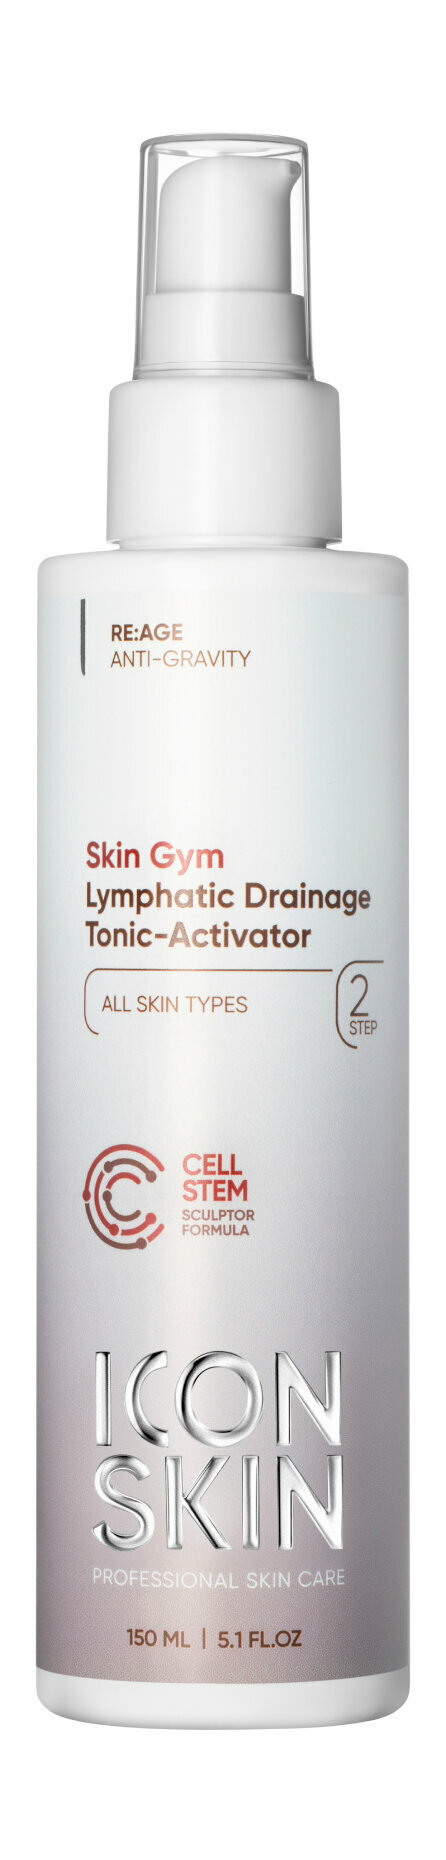 ICON SKIN Тоник-активатор для лица Skin Gym лимфо-дренажный, 100 мл